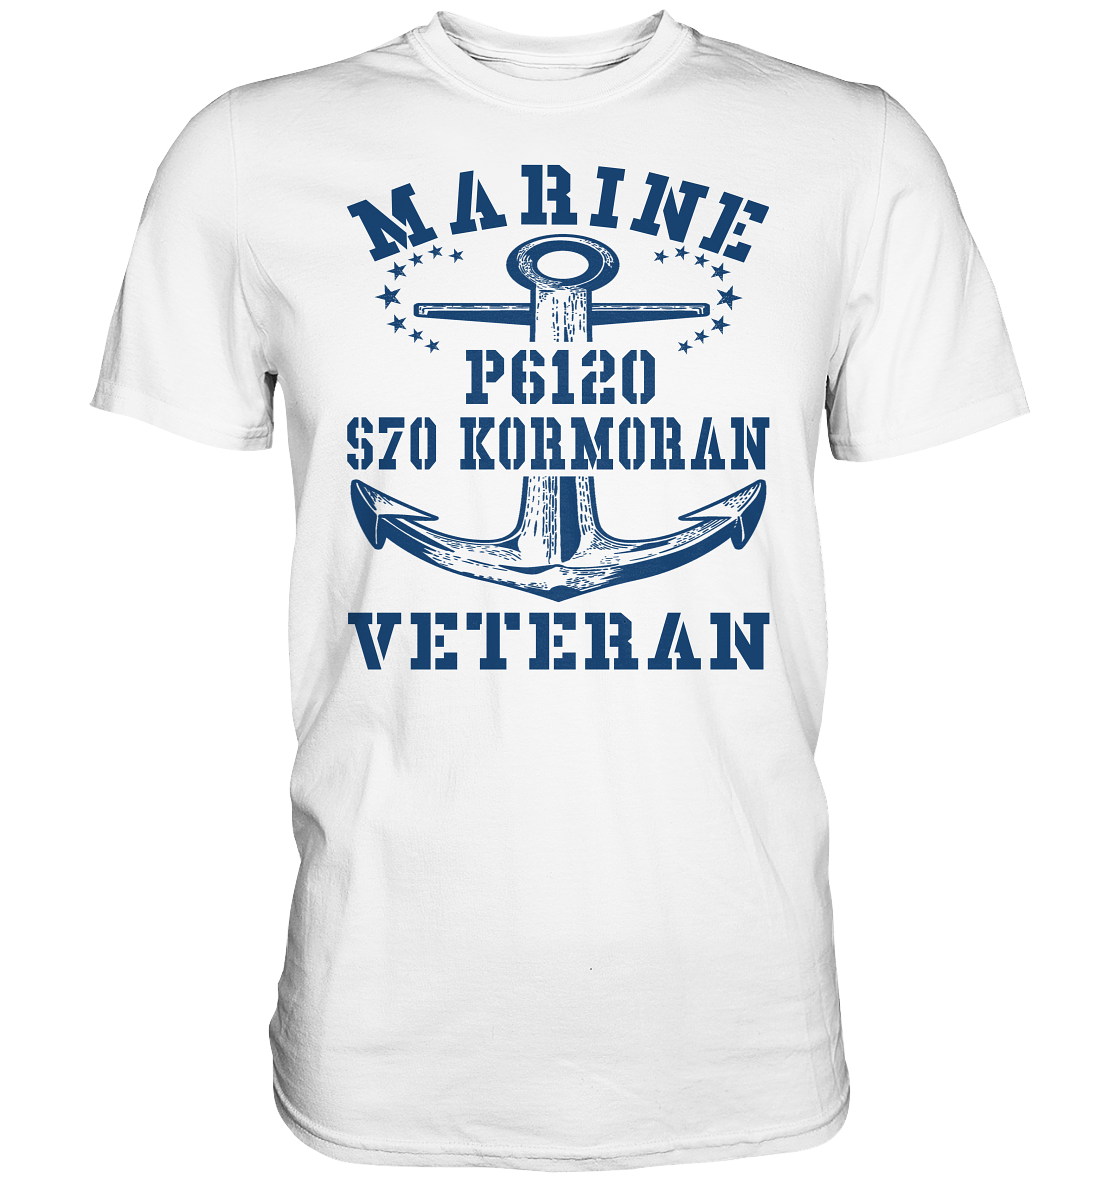 FK-Schnellboot P6120 KORMORAN Marine Veteran  - Premium Shirt